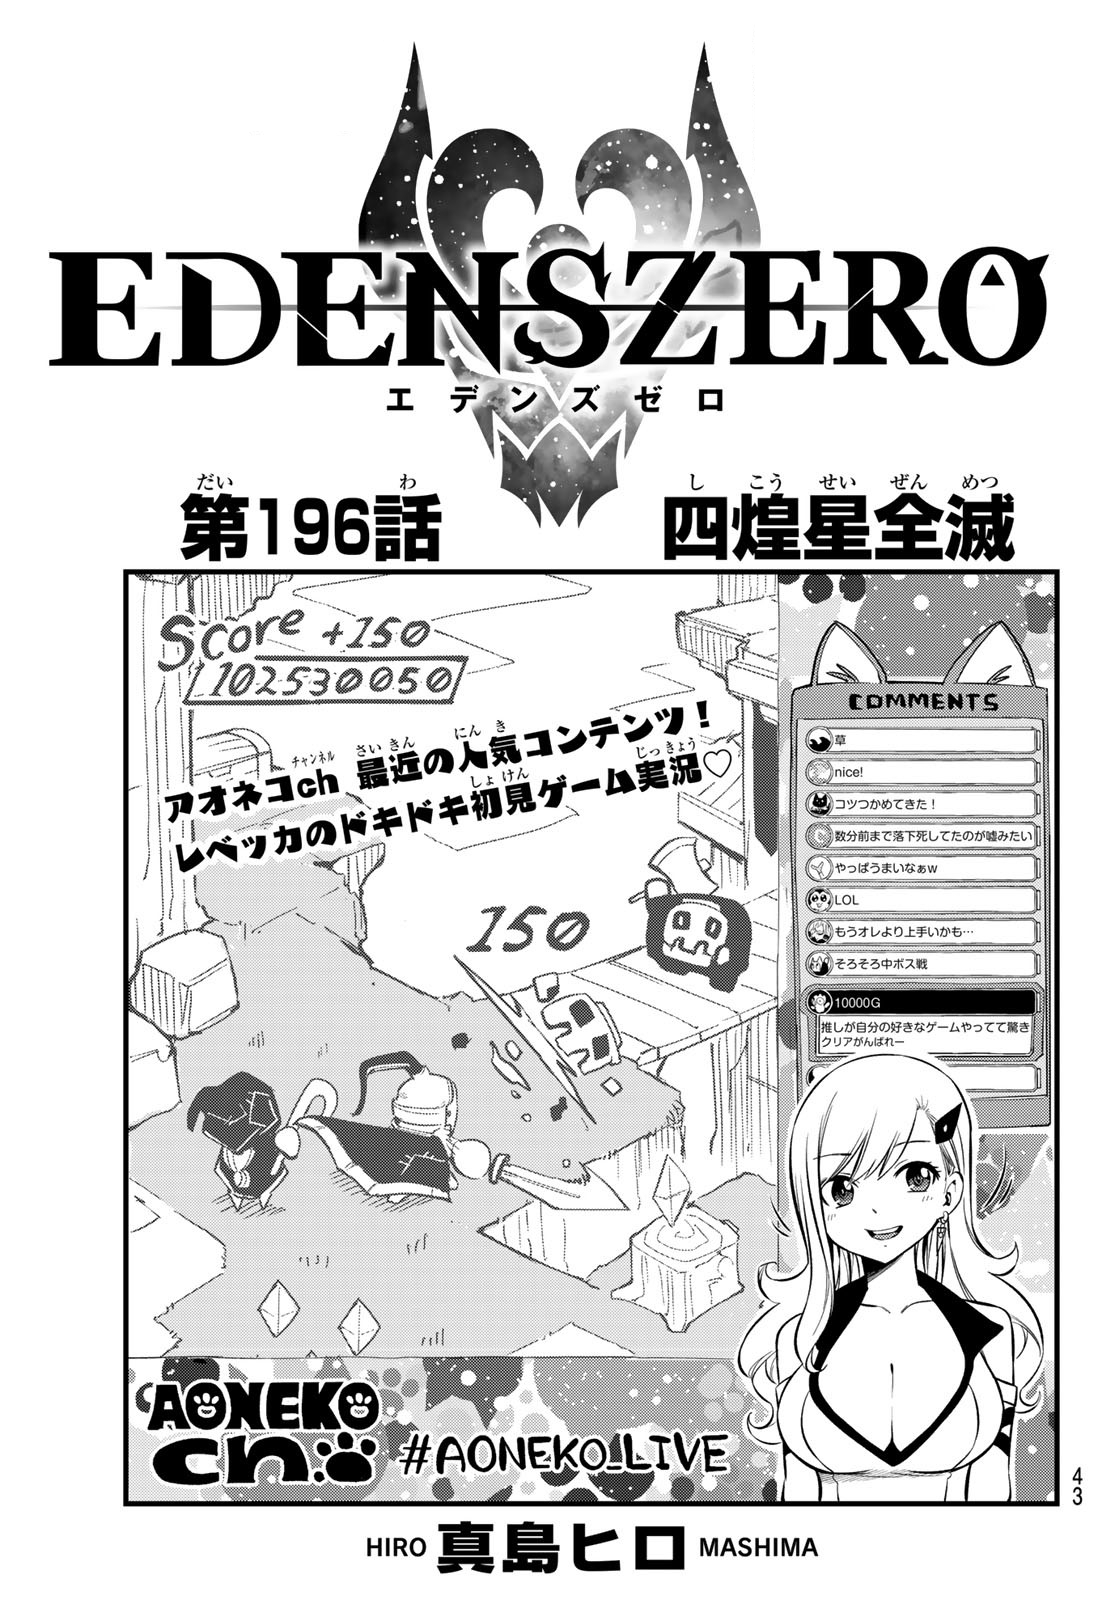 Wizard, Edens Zero Wiki